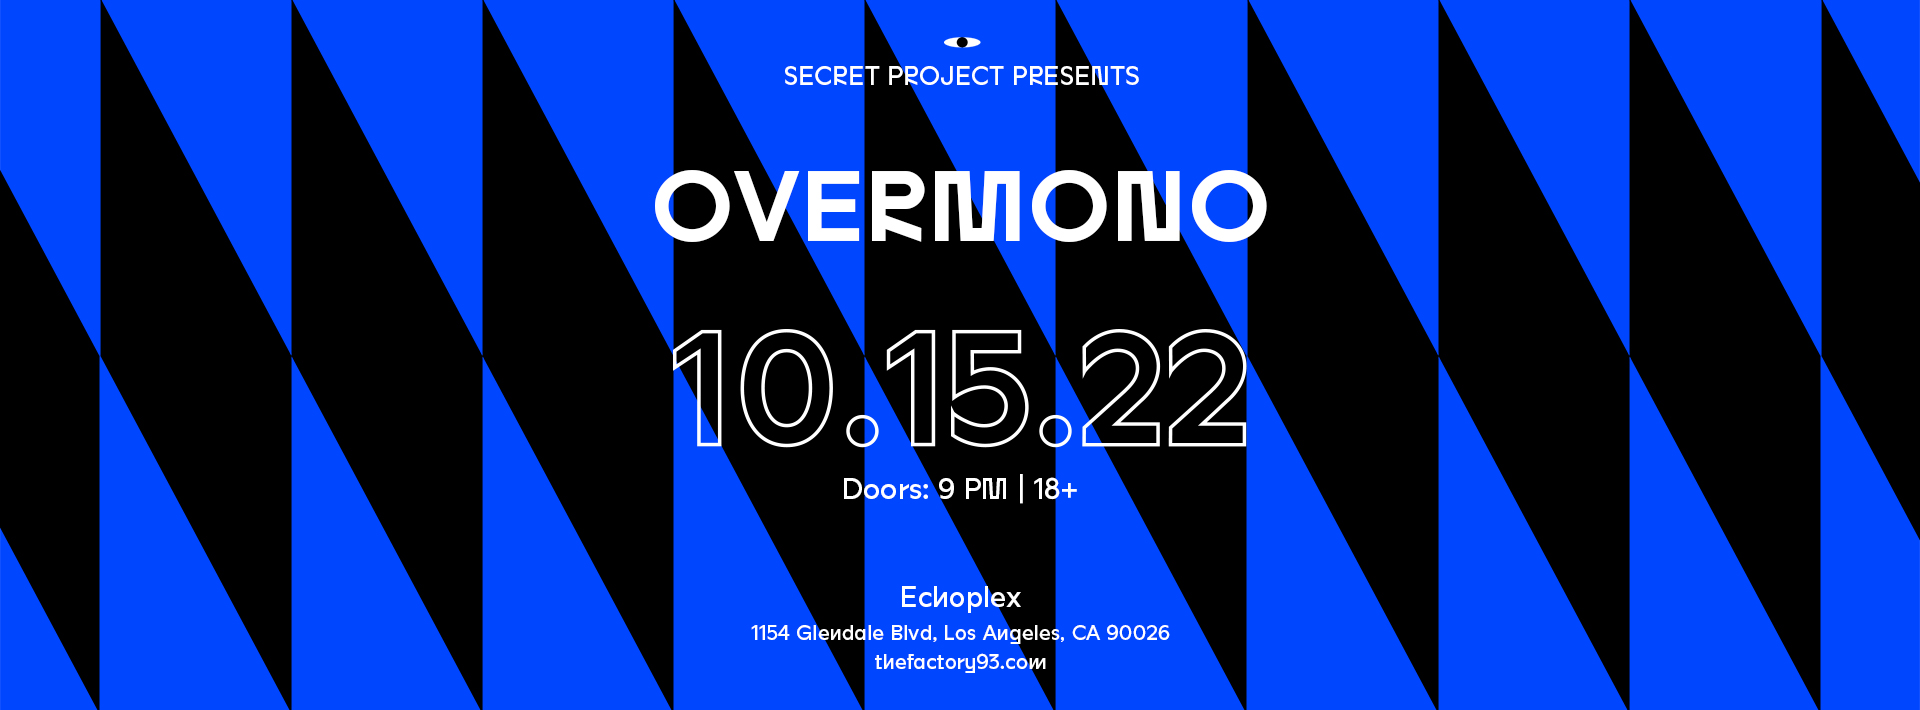 Secret Project presents Overmono